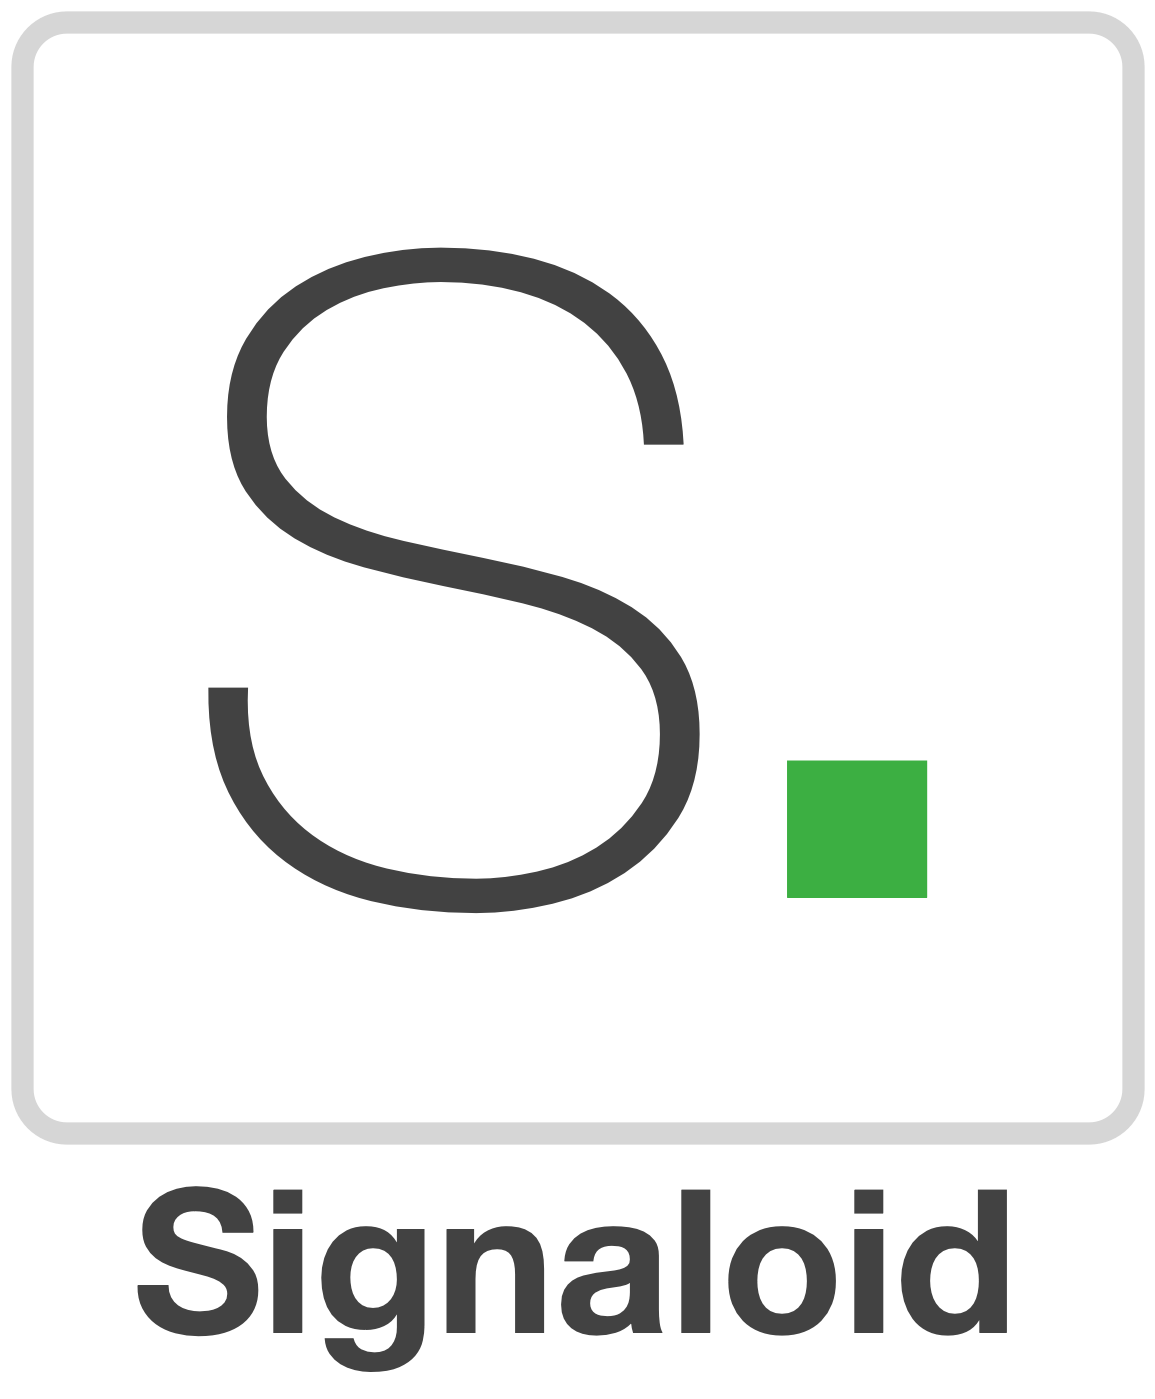 signaloid-logo.png